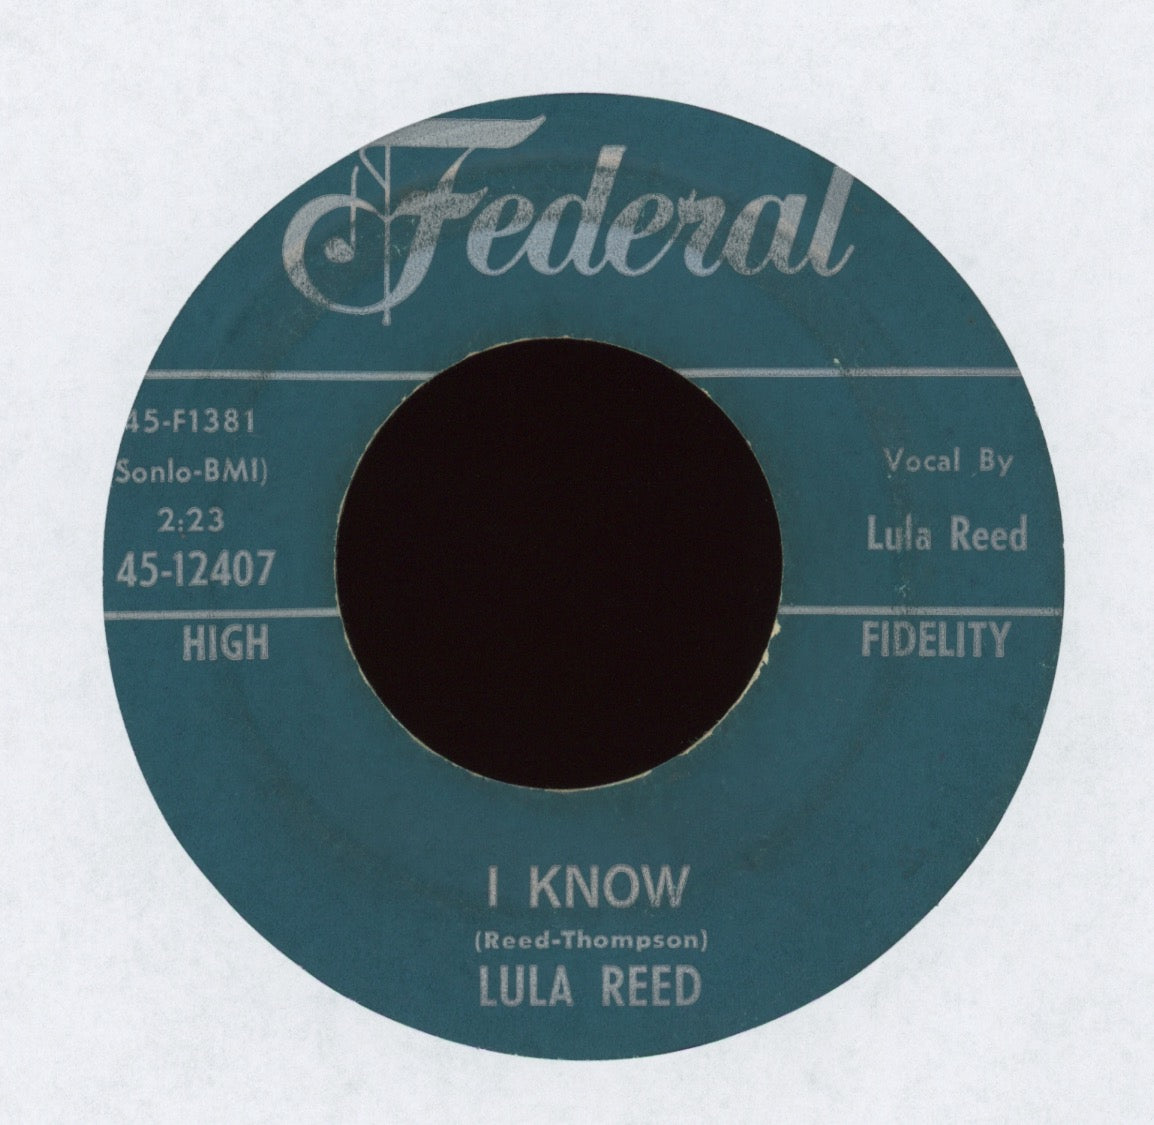 Lula Reed - I'm A Woman on Federal